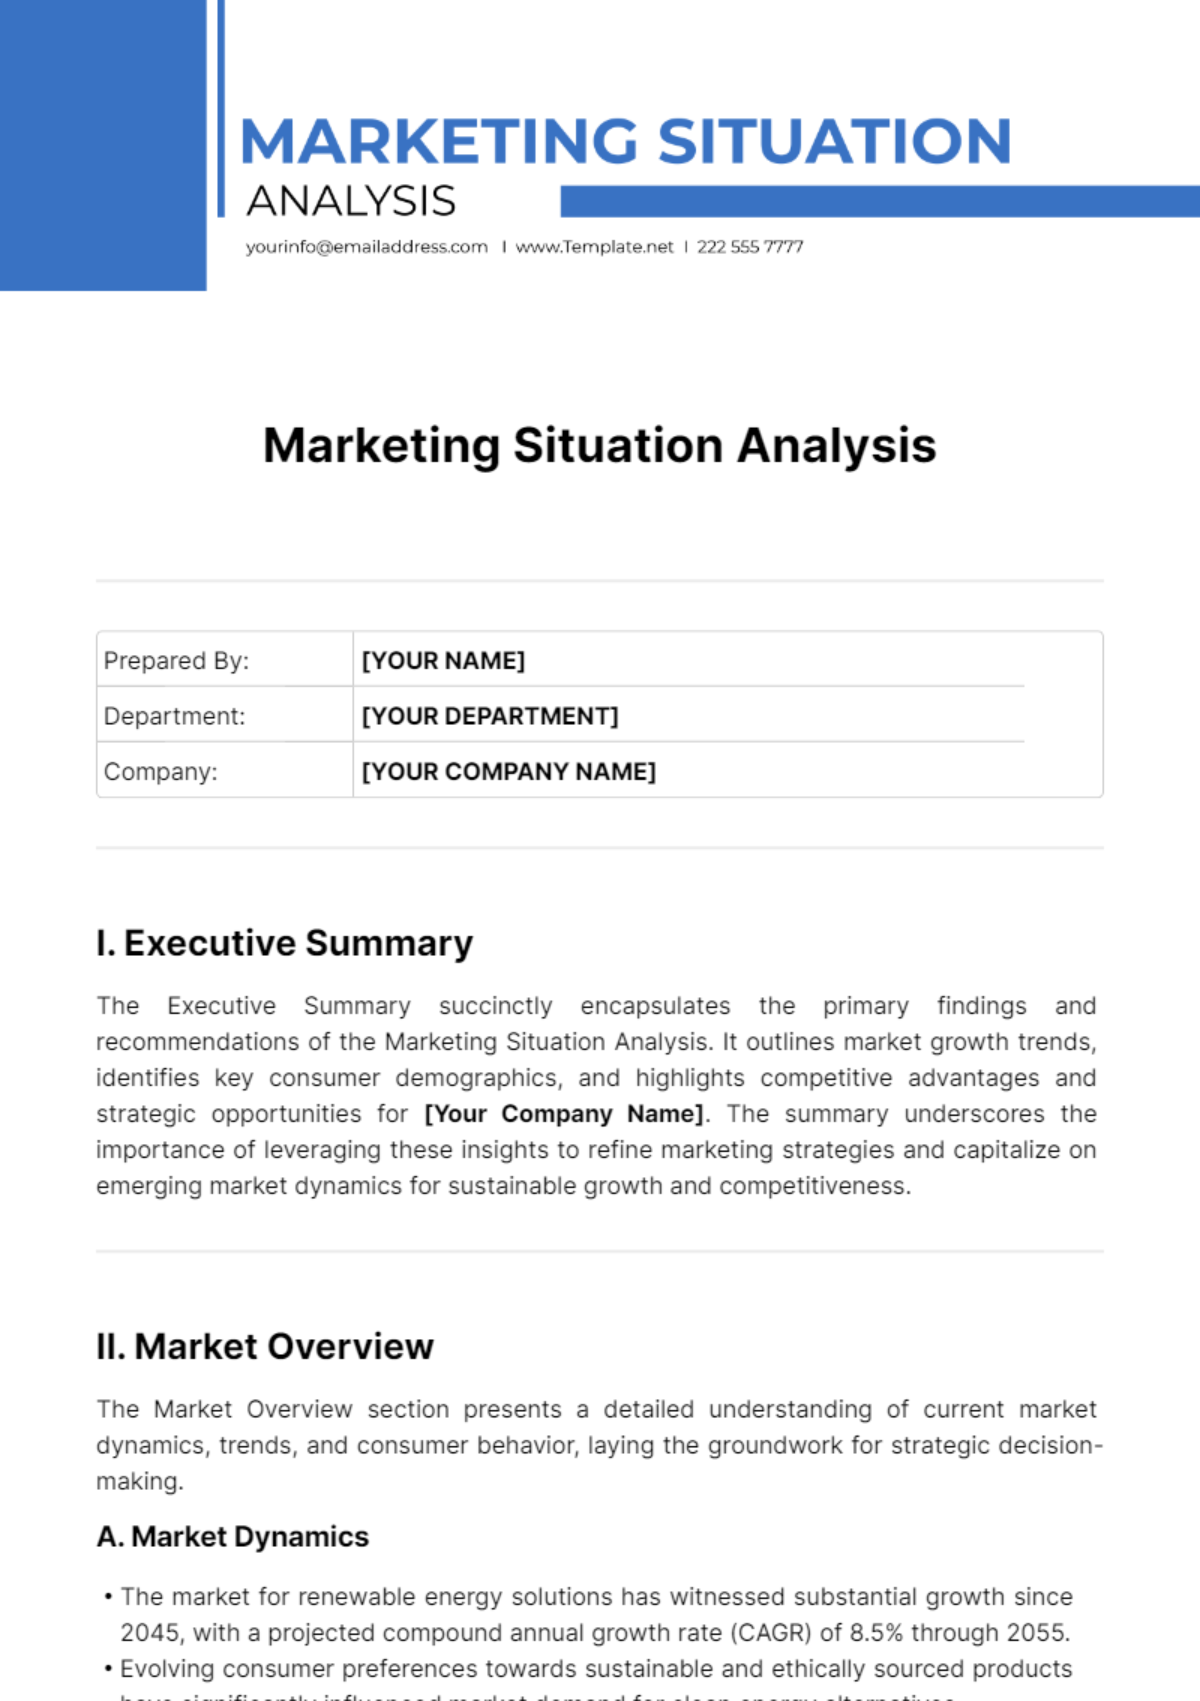 Marketing Situation Analysis Template